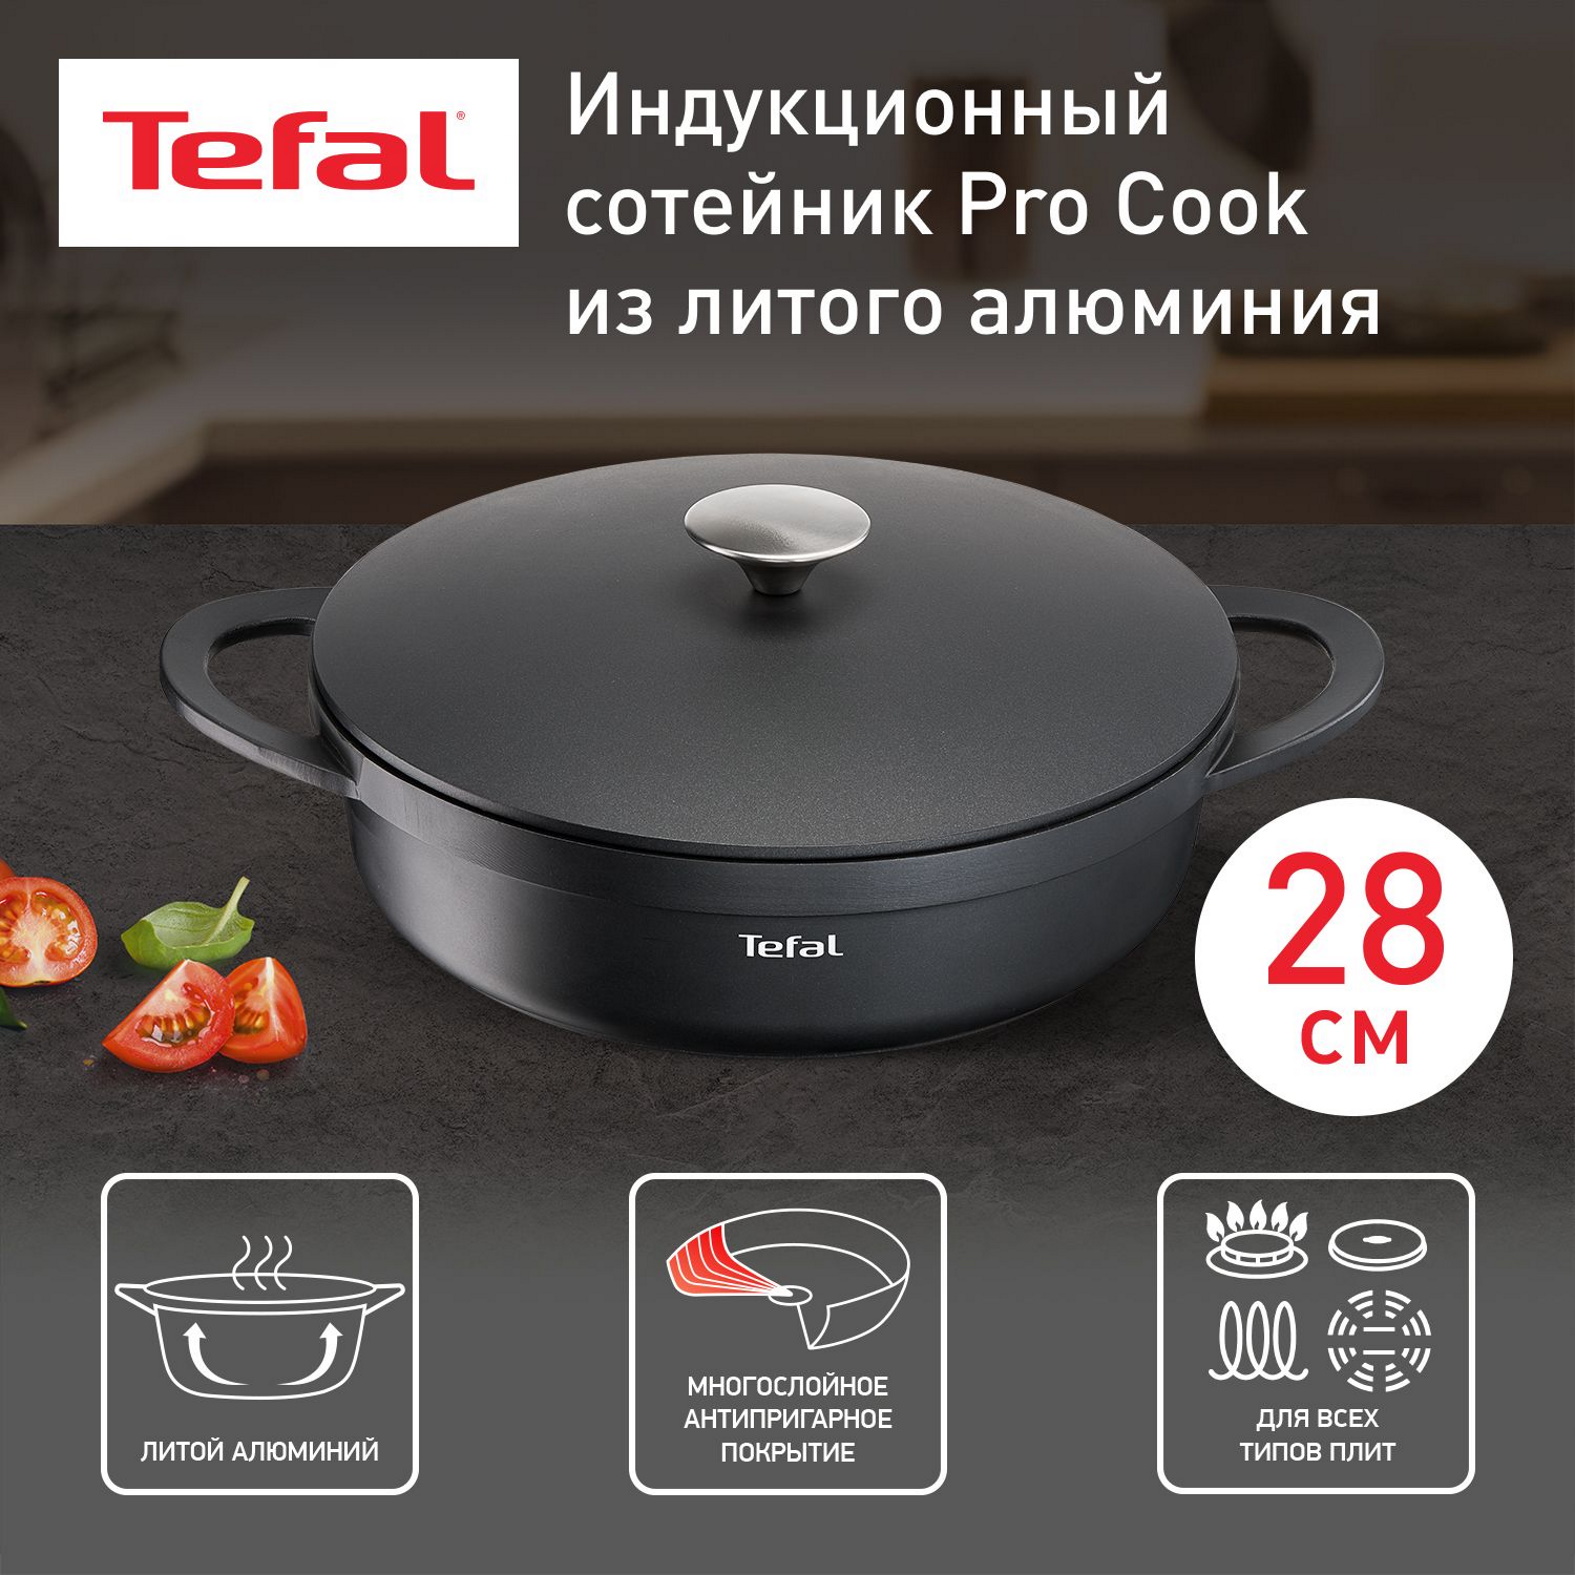  с крышкой Tefal Pro Cook E2187275, 28 см –   .